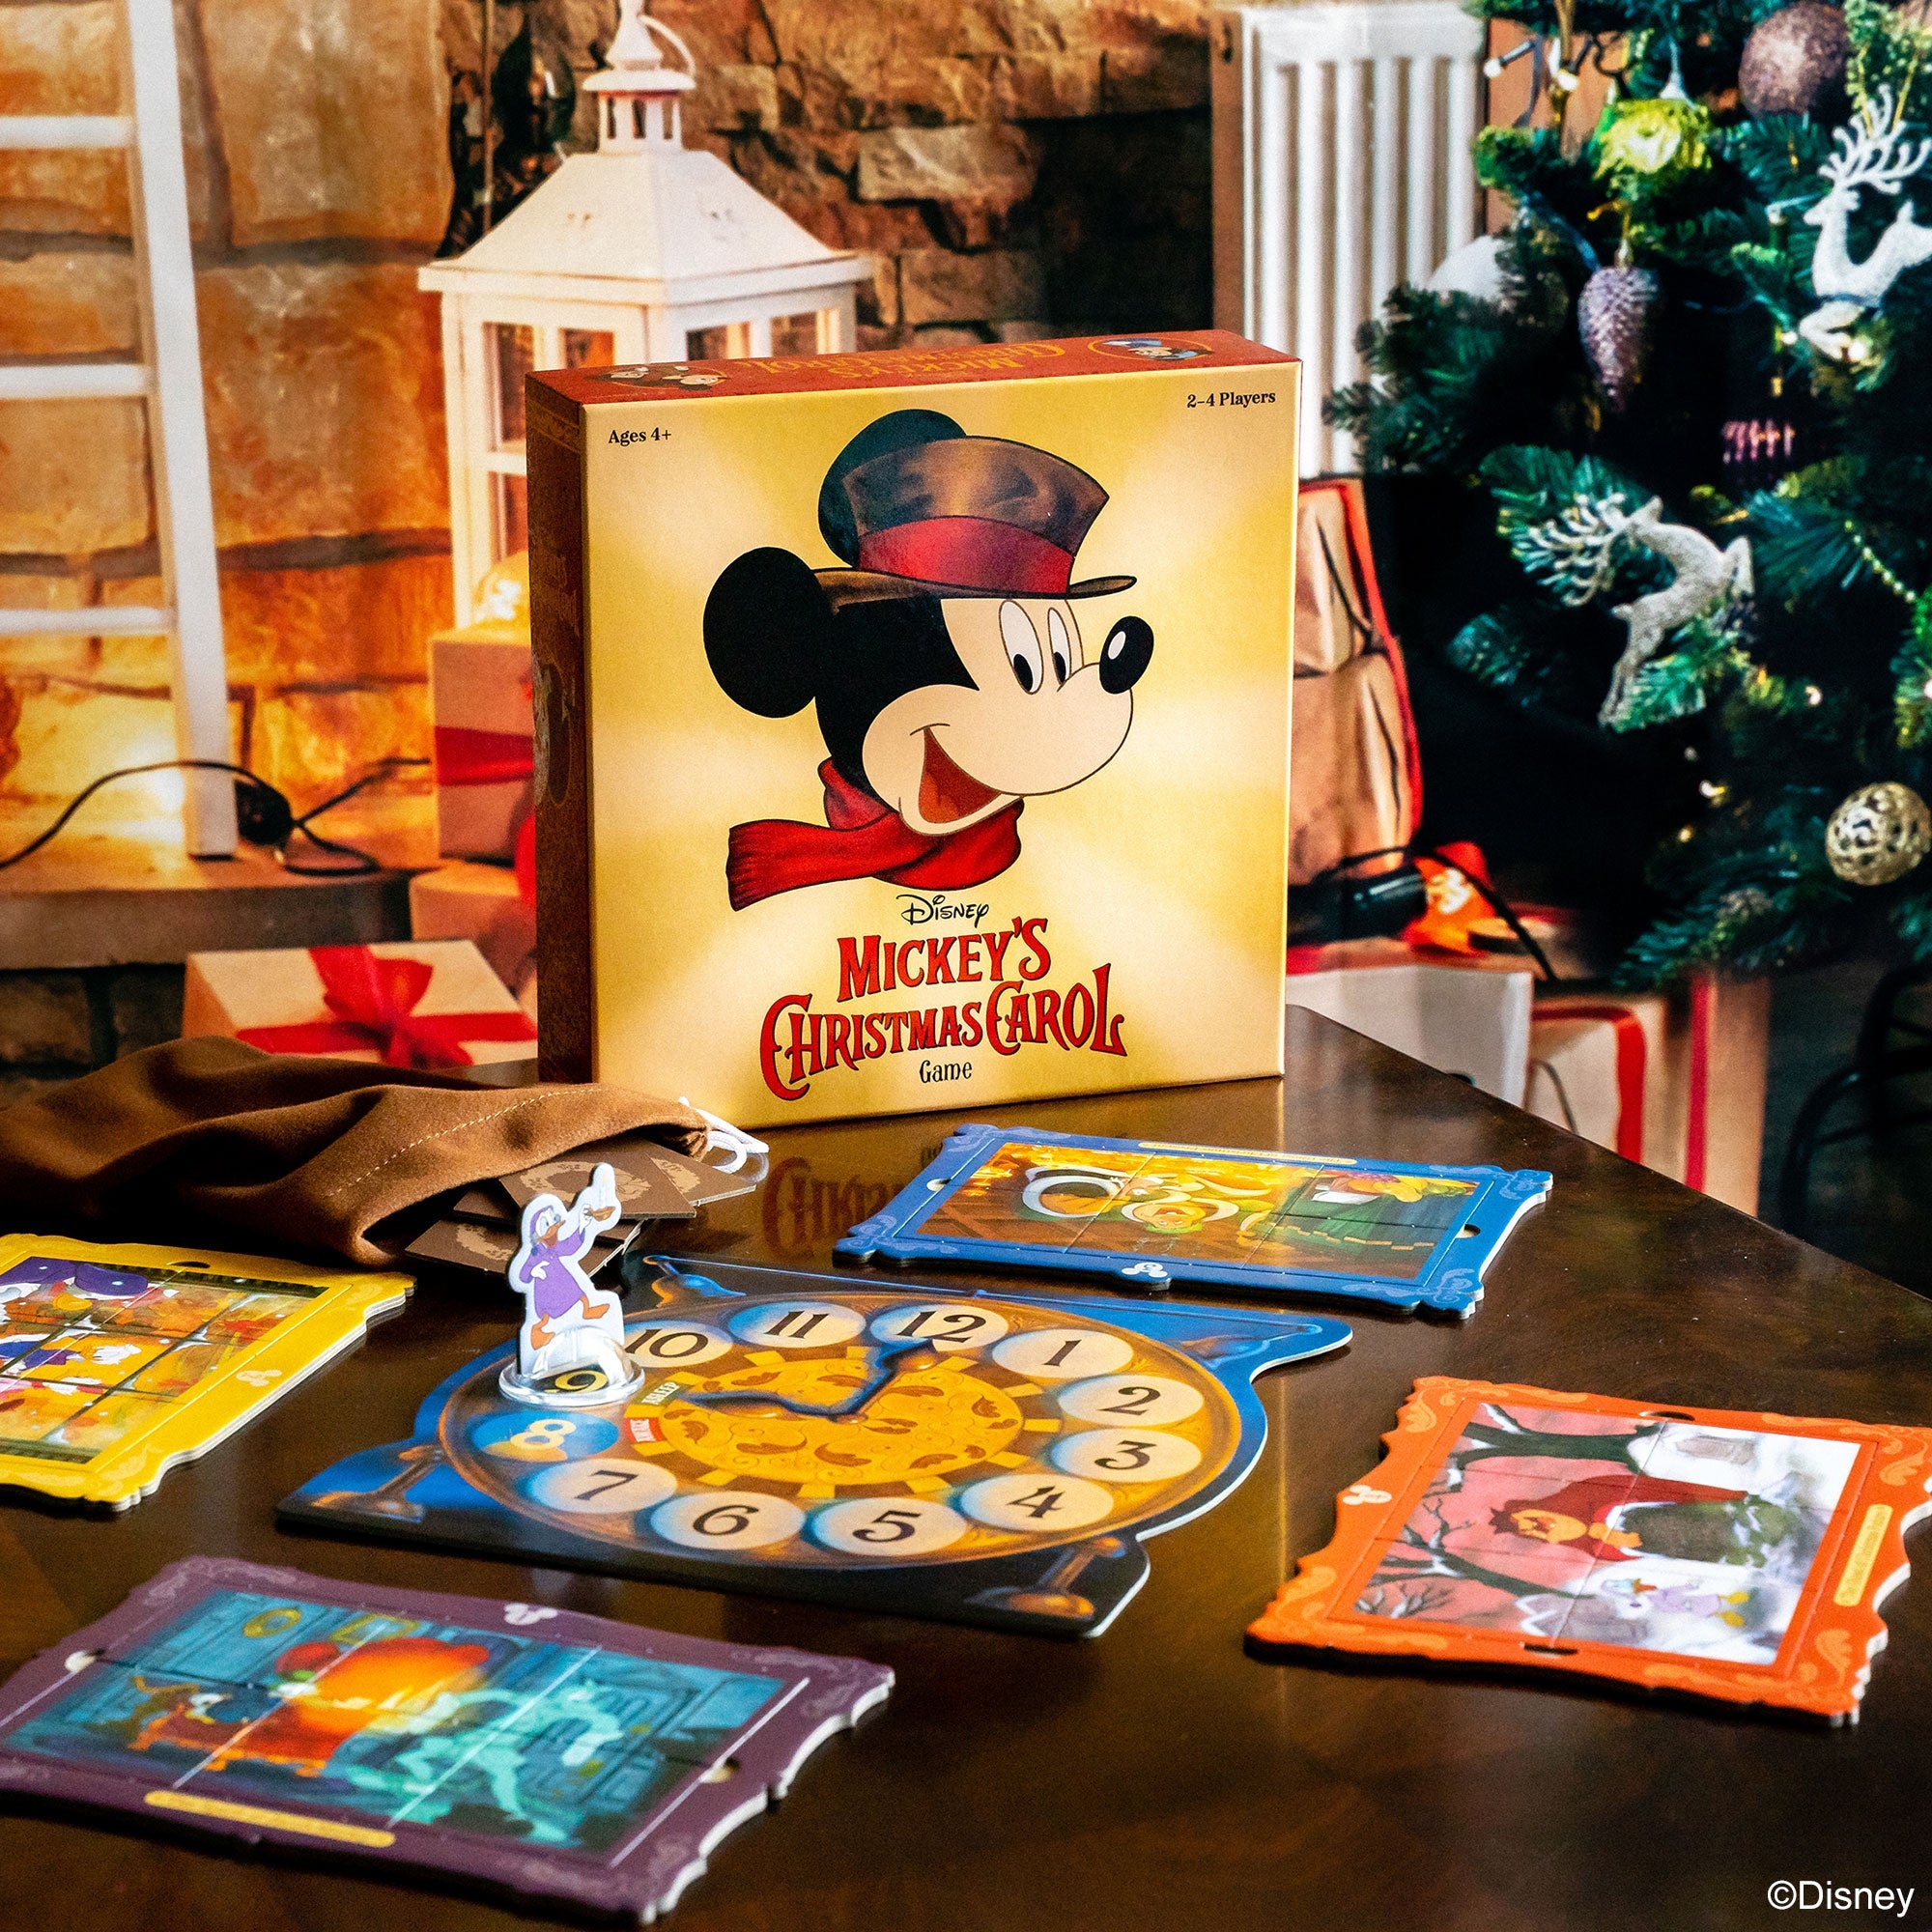 Funko Disney Mickey Mouse's Christmas Carol Signature Game